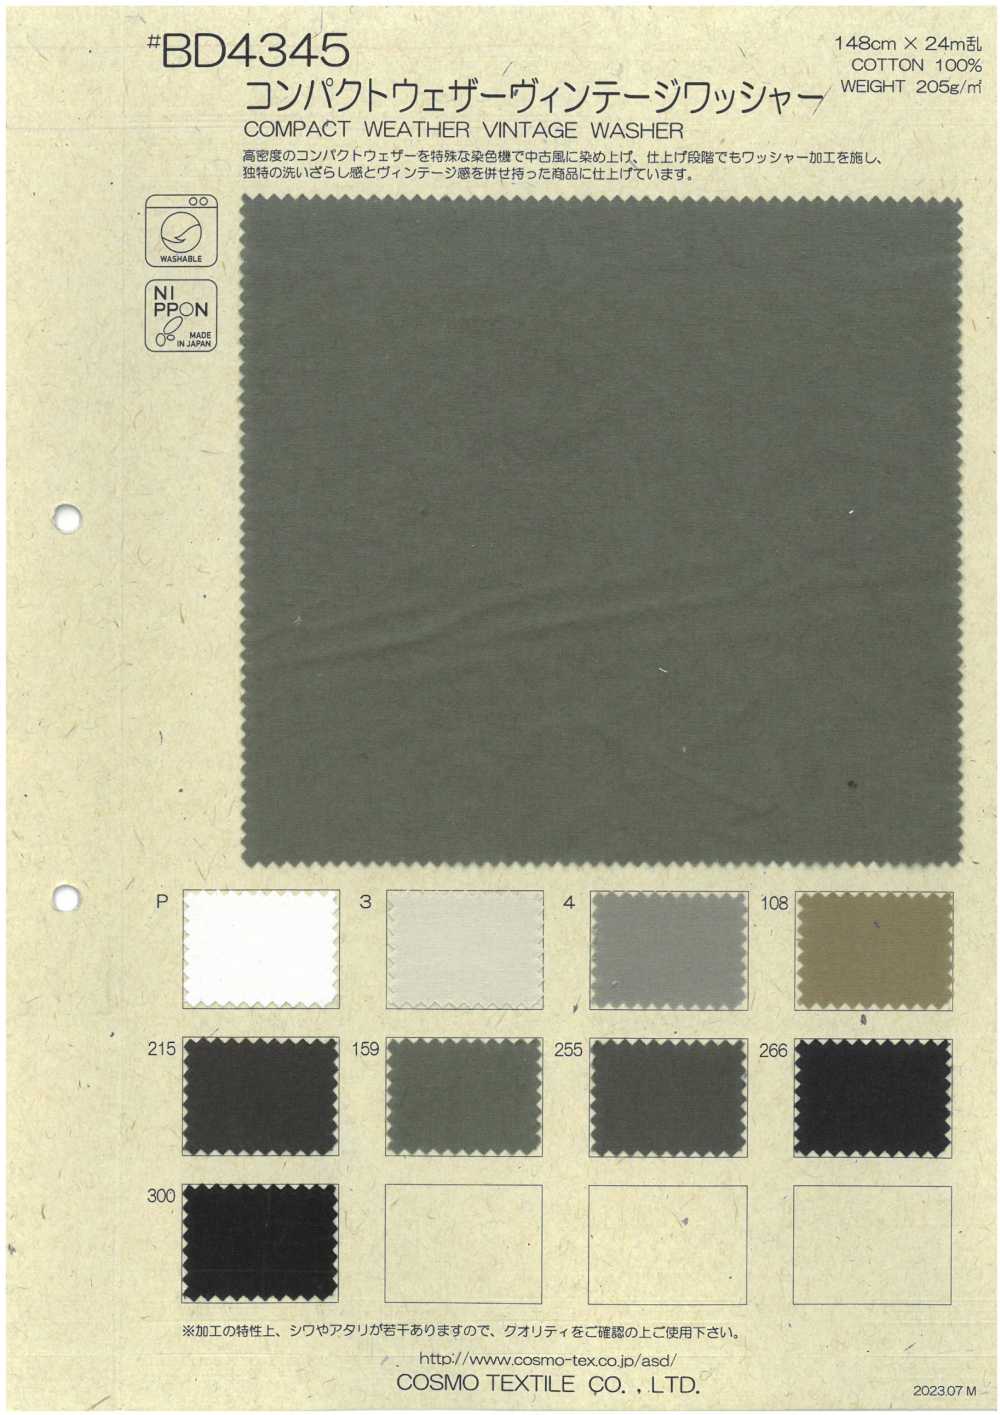 BD4345 Processamento De Lavadora Vintage De Pano Climático Compacto[Têxtil / Tecido] COSMO TEXTILE